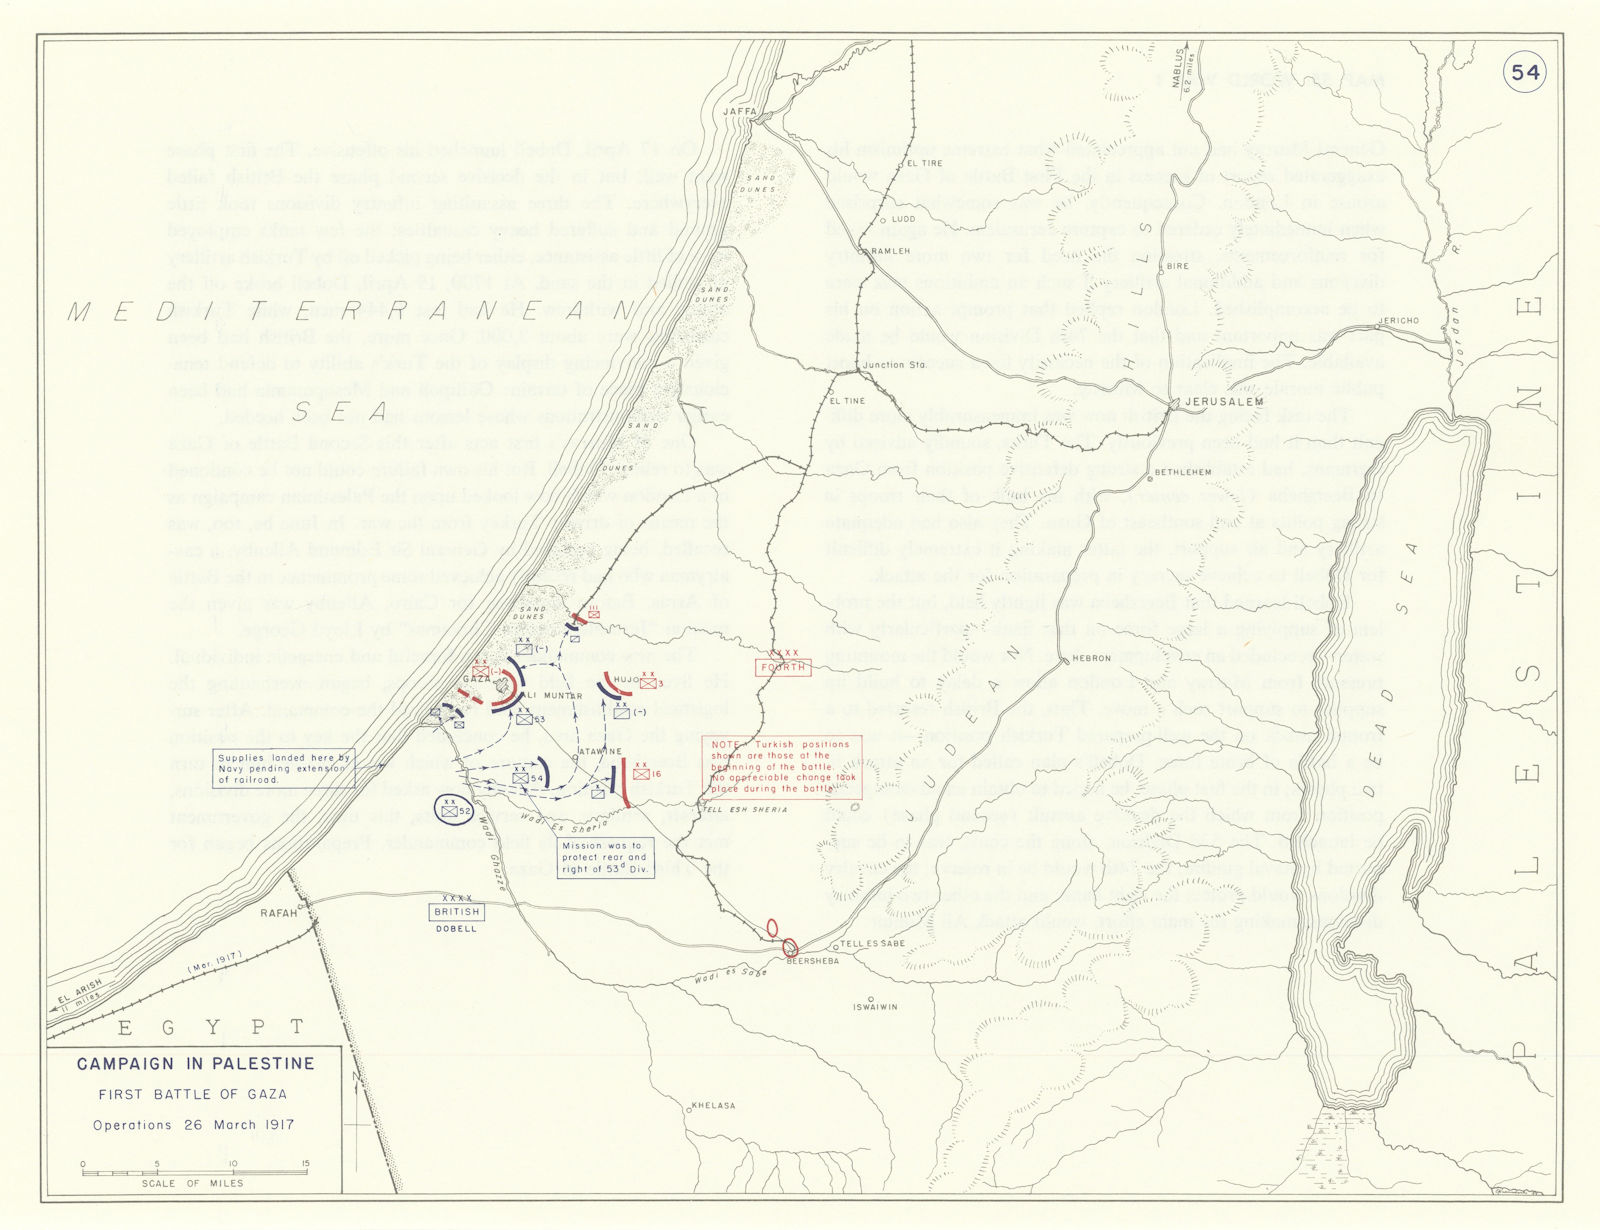 World War 1 Palestine Campaign 26 March 1917 1st Battle of Gaza. Israel 1959 map